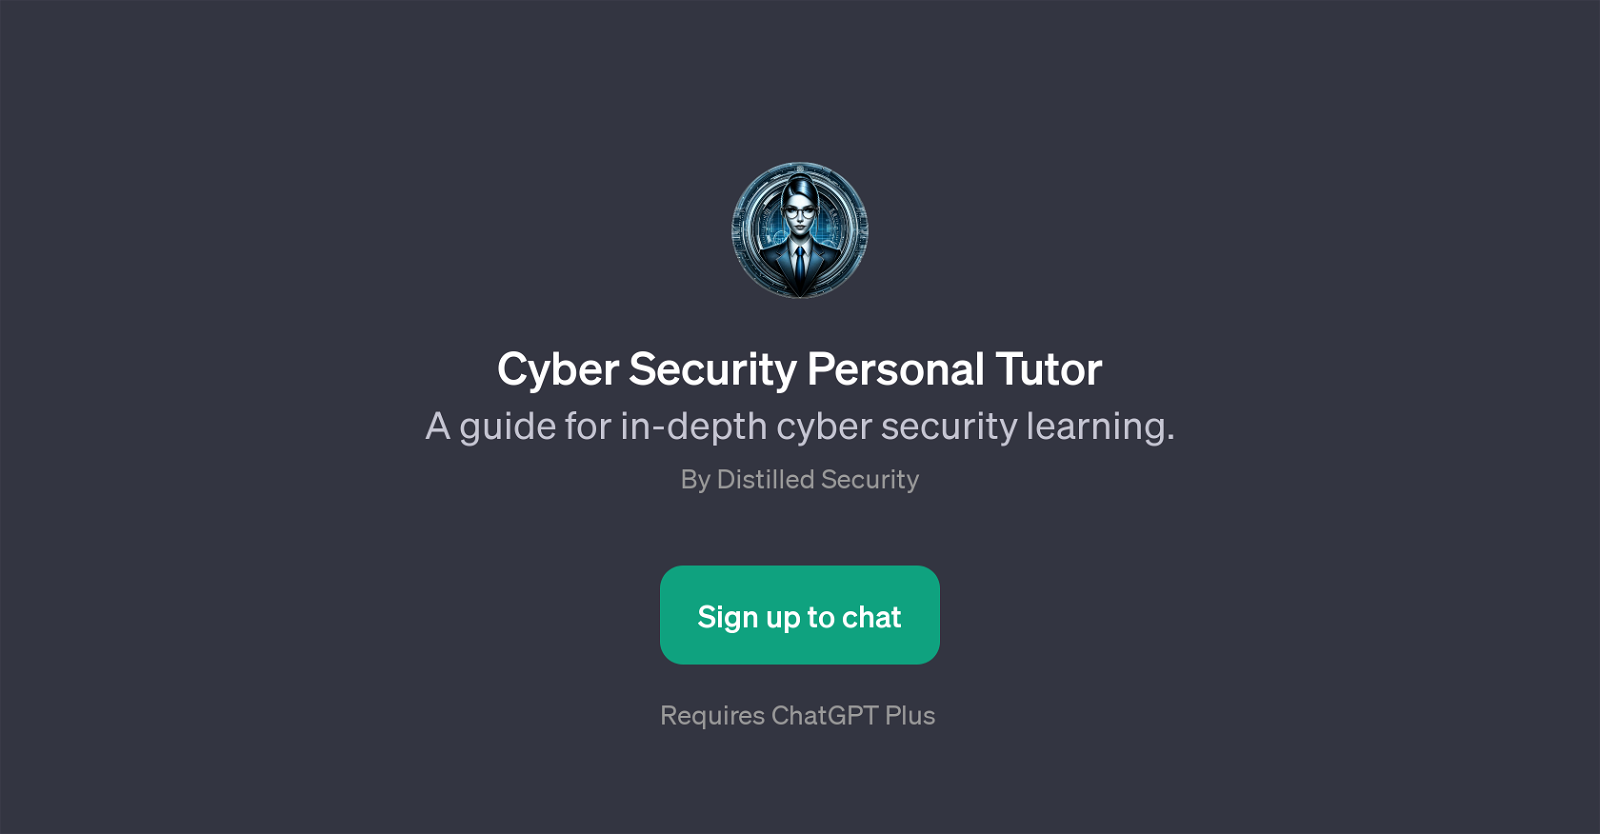 Cyber Security Personal Tutor website